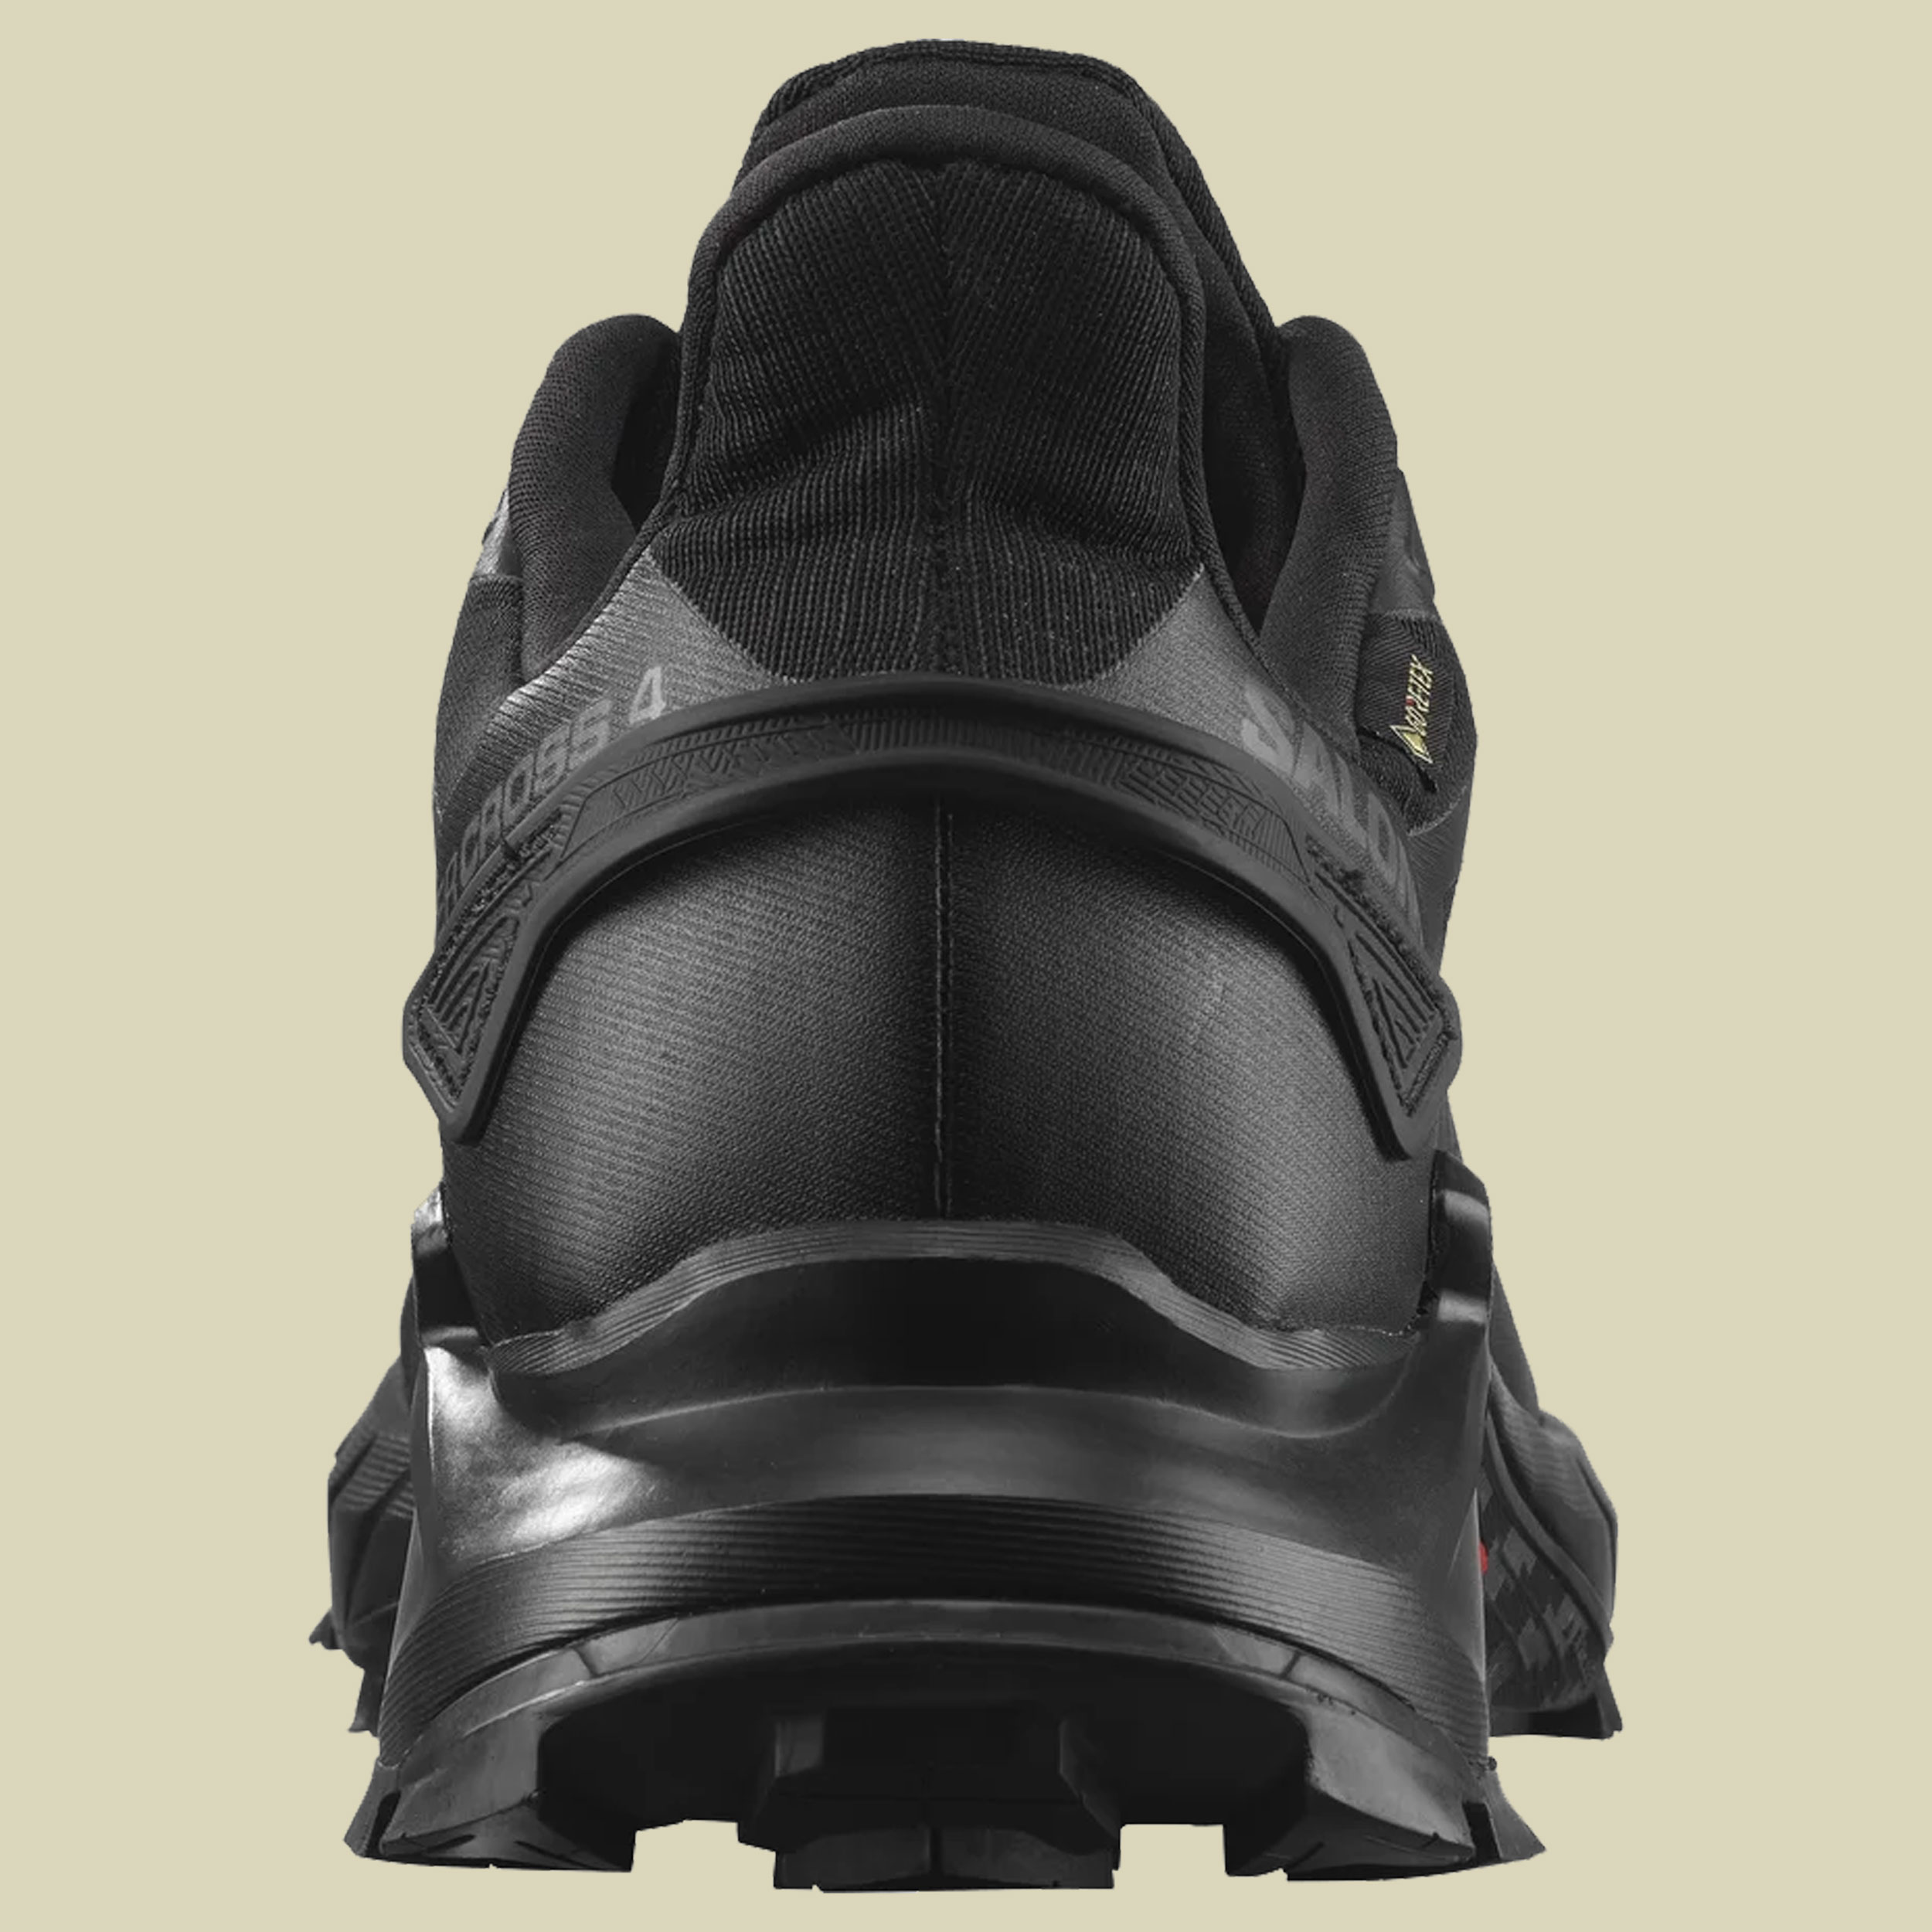 Supercross 4 GTX Größe UK 11,5 Farbe black/black/black